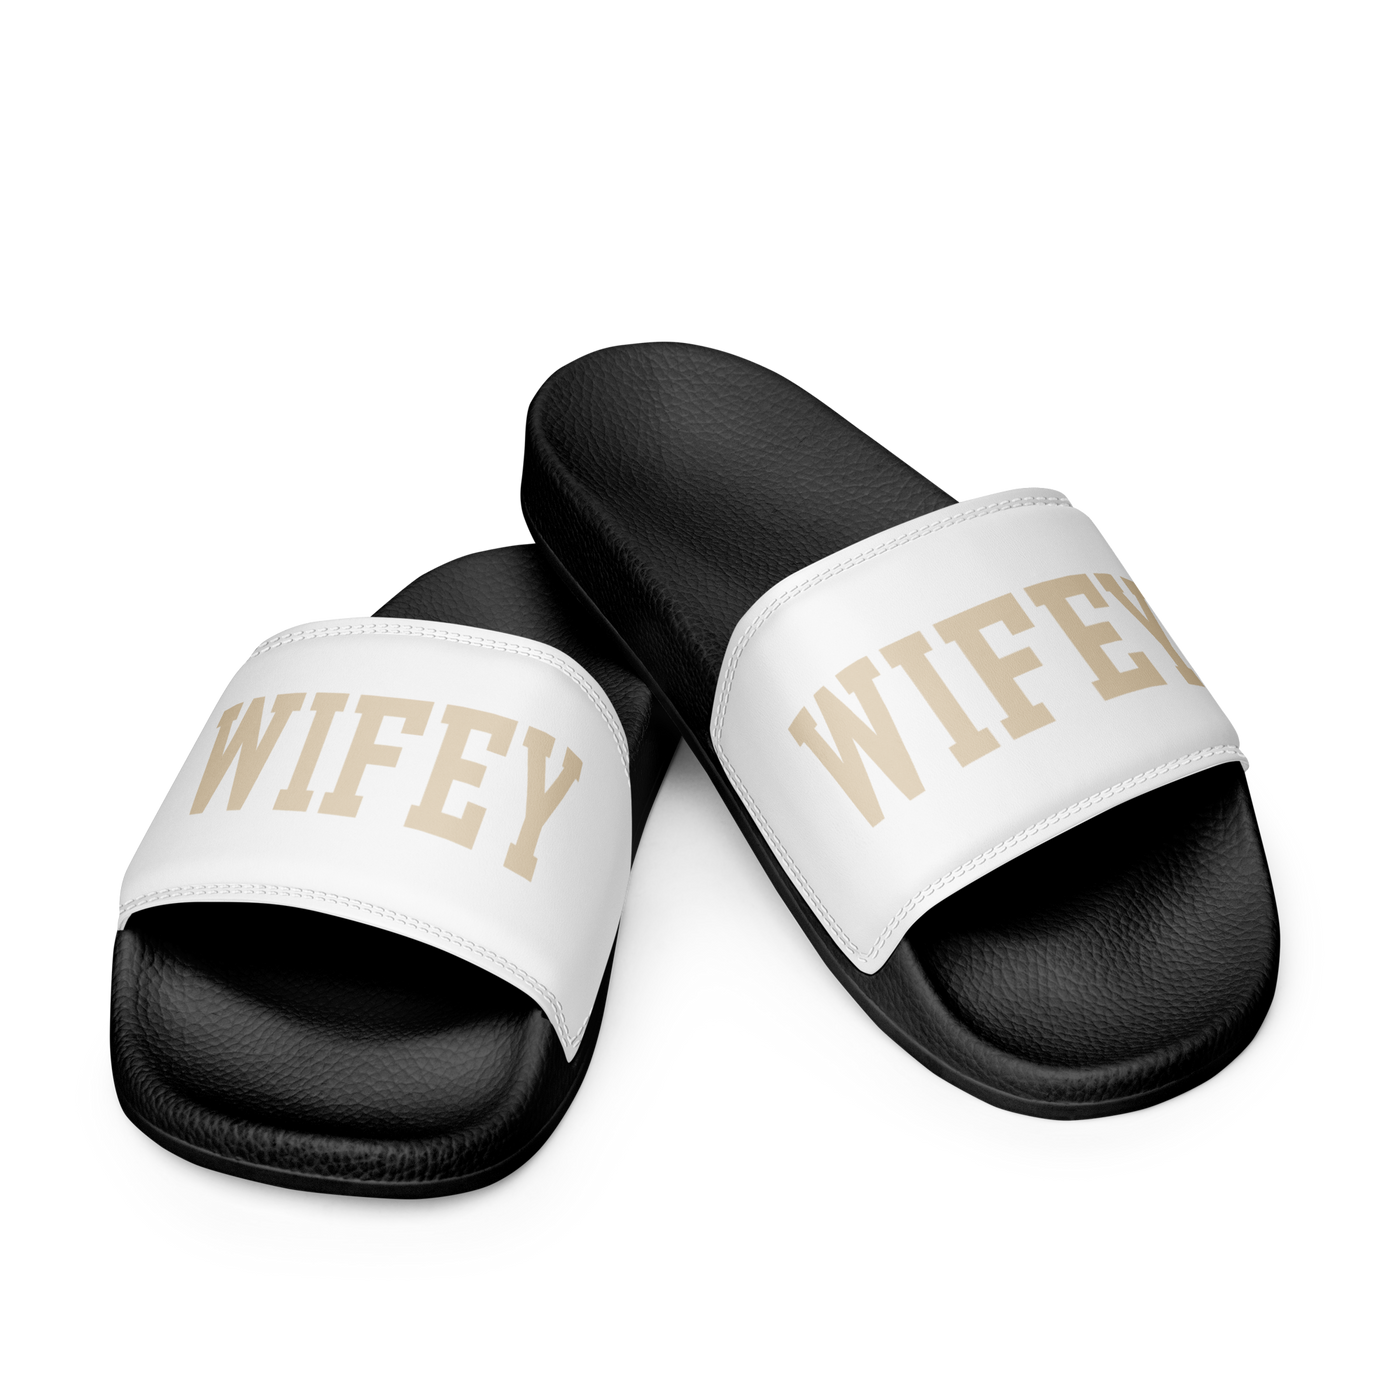 'Wifey' Women's Slides